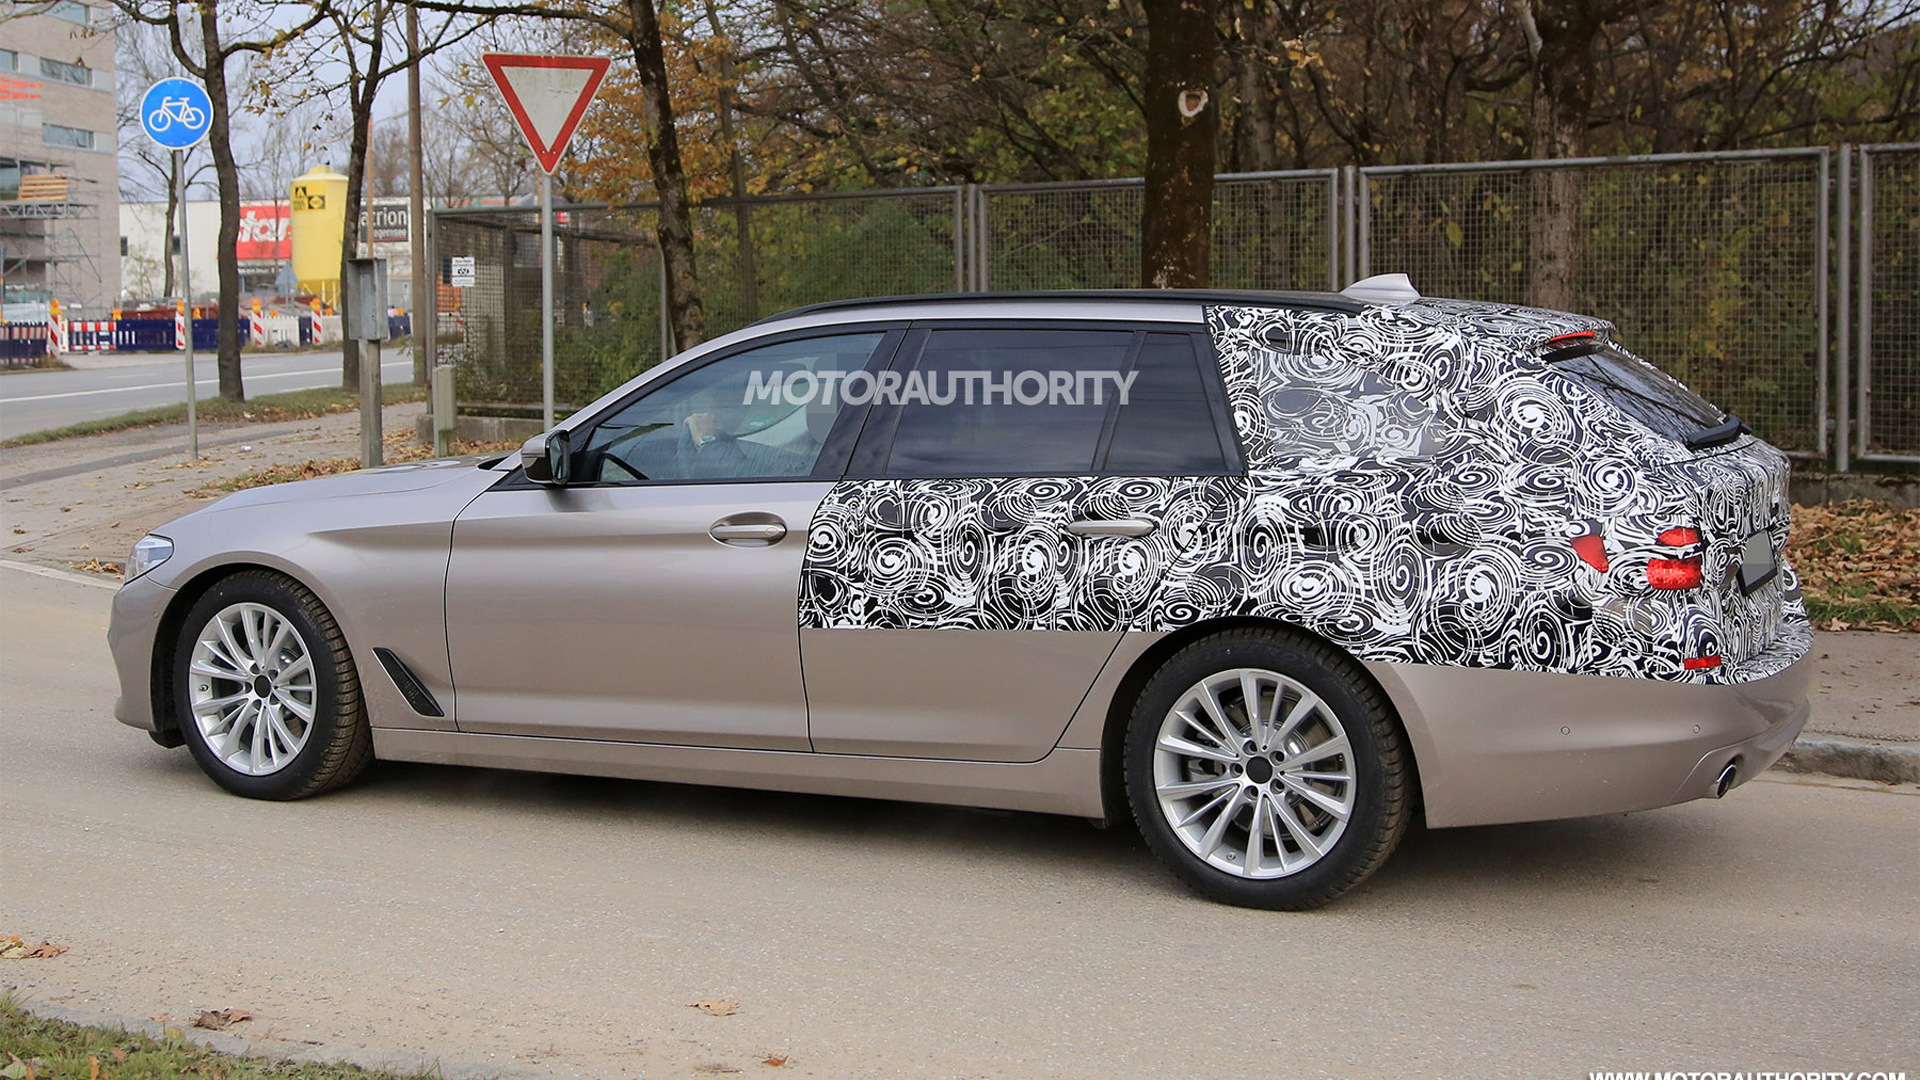 2017 BMW 5-Series Sports Wagon (Touring) spy shots - Image via S. Baldauf/SB-Medien